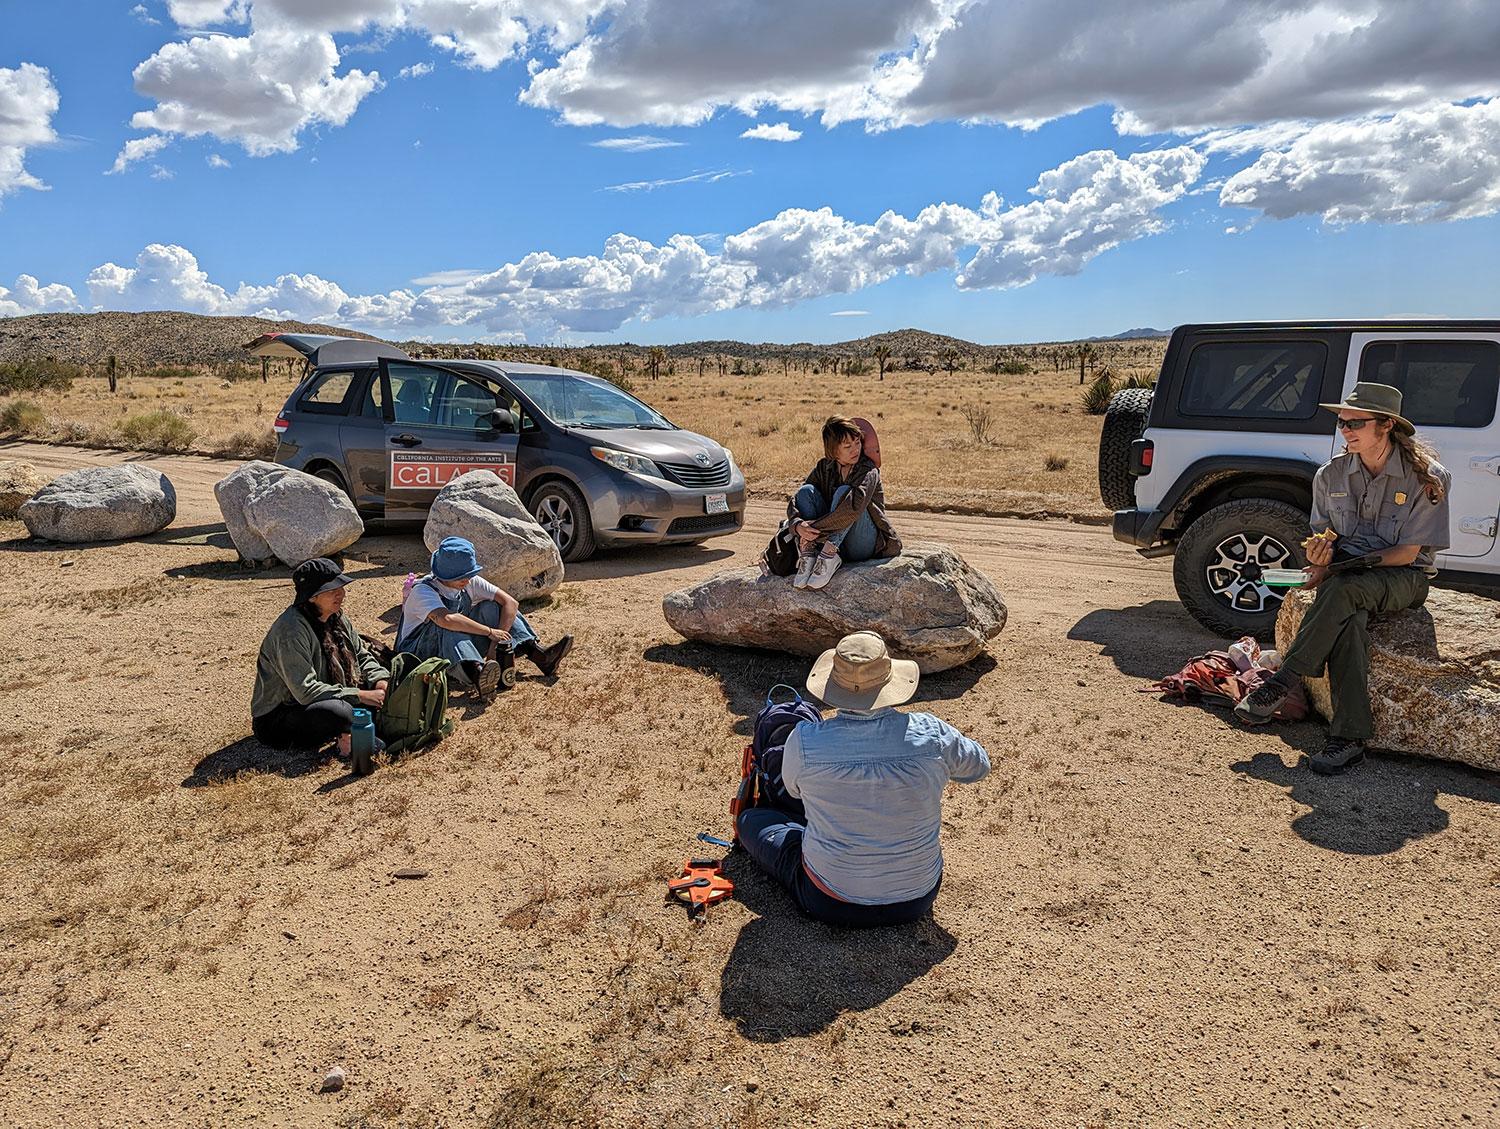 National Park Service ranger addresses people seated on desert ground or rocks